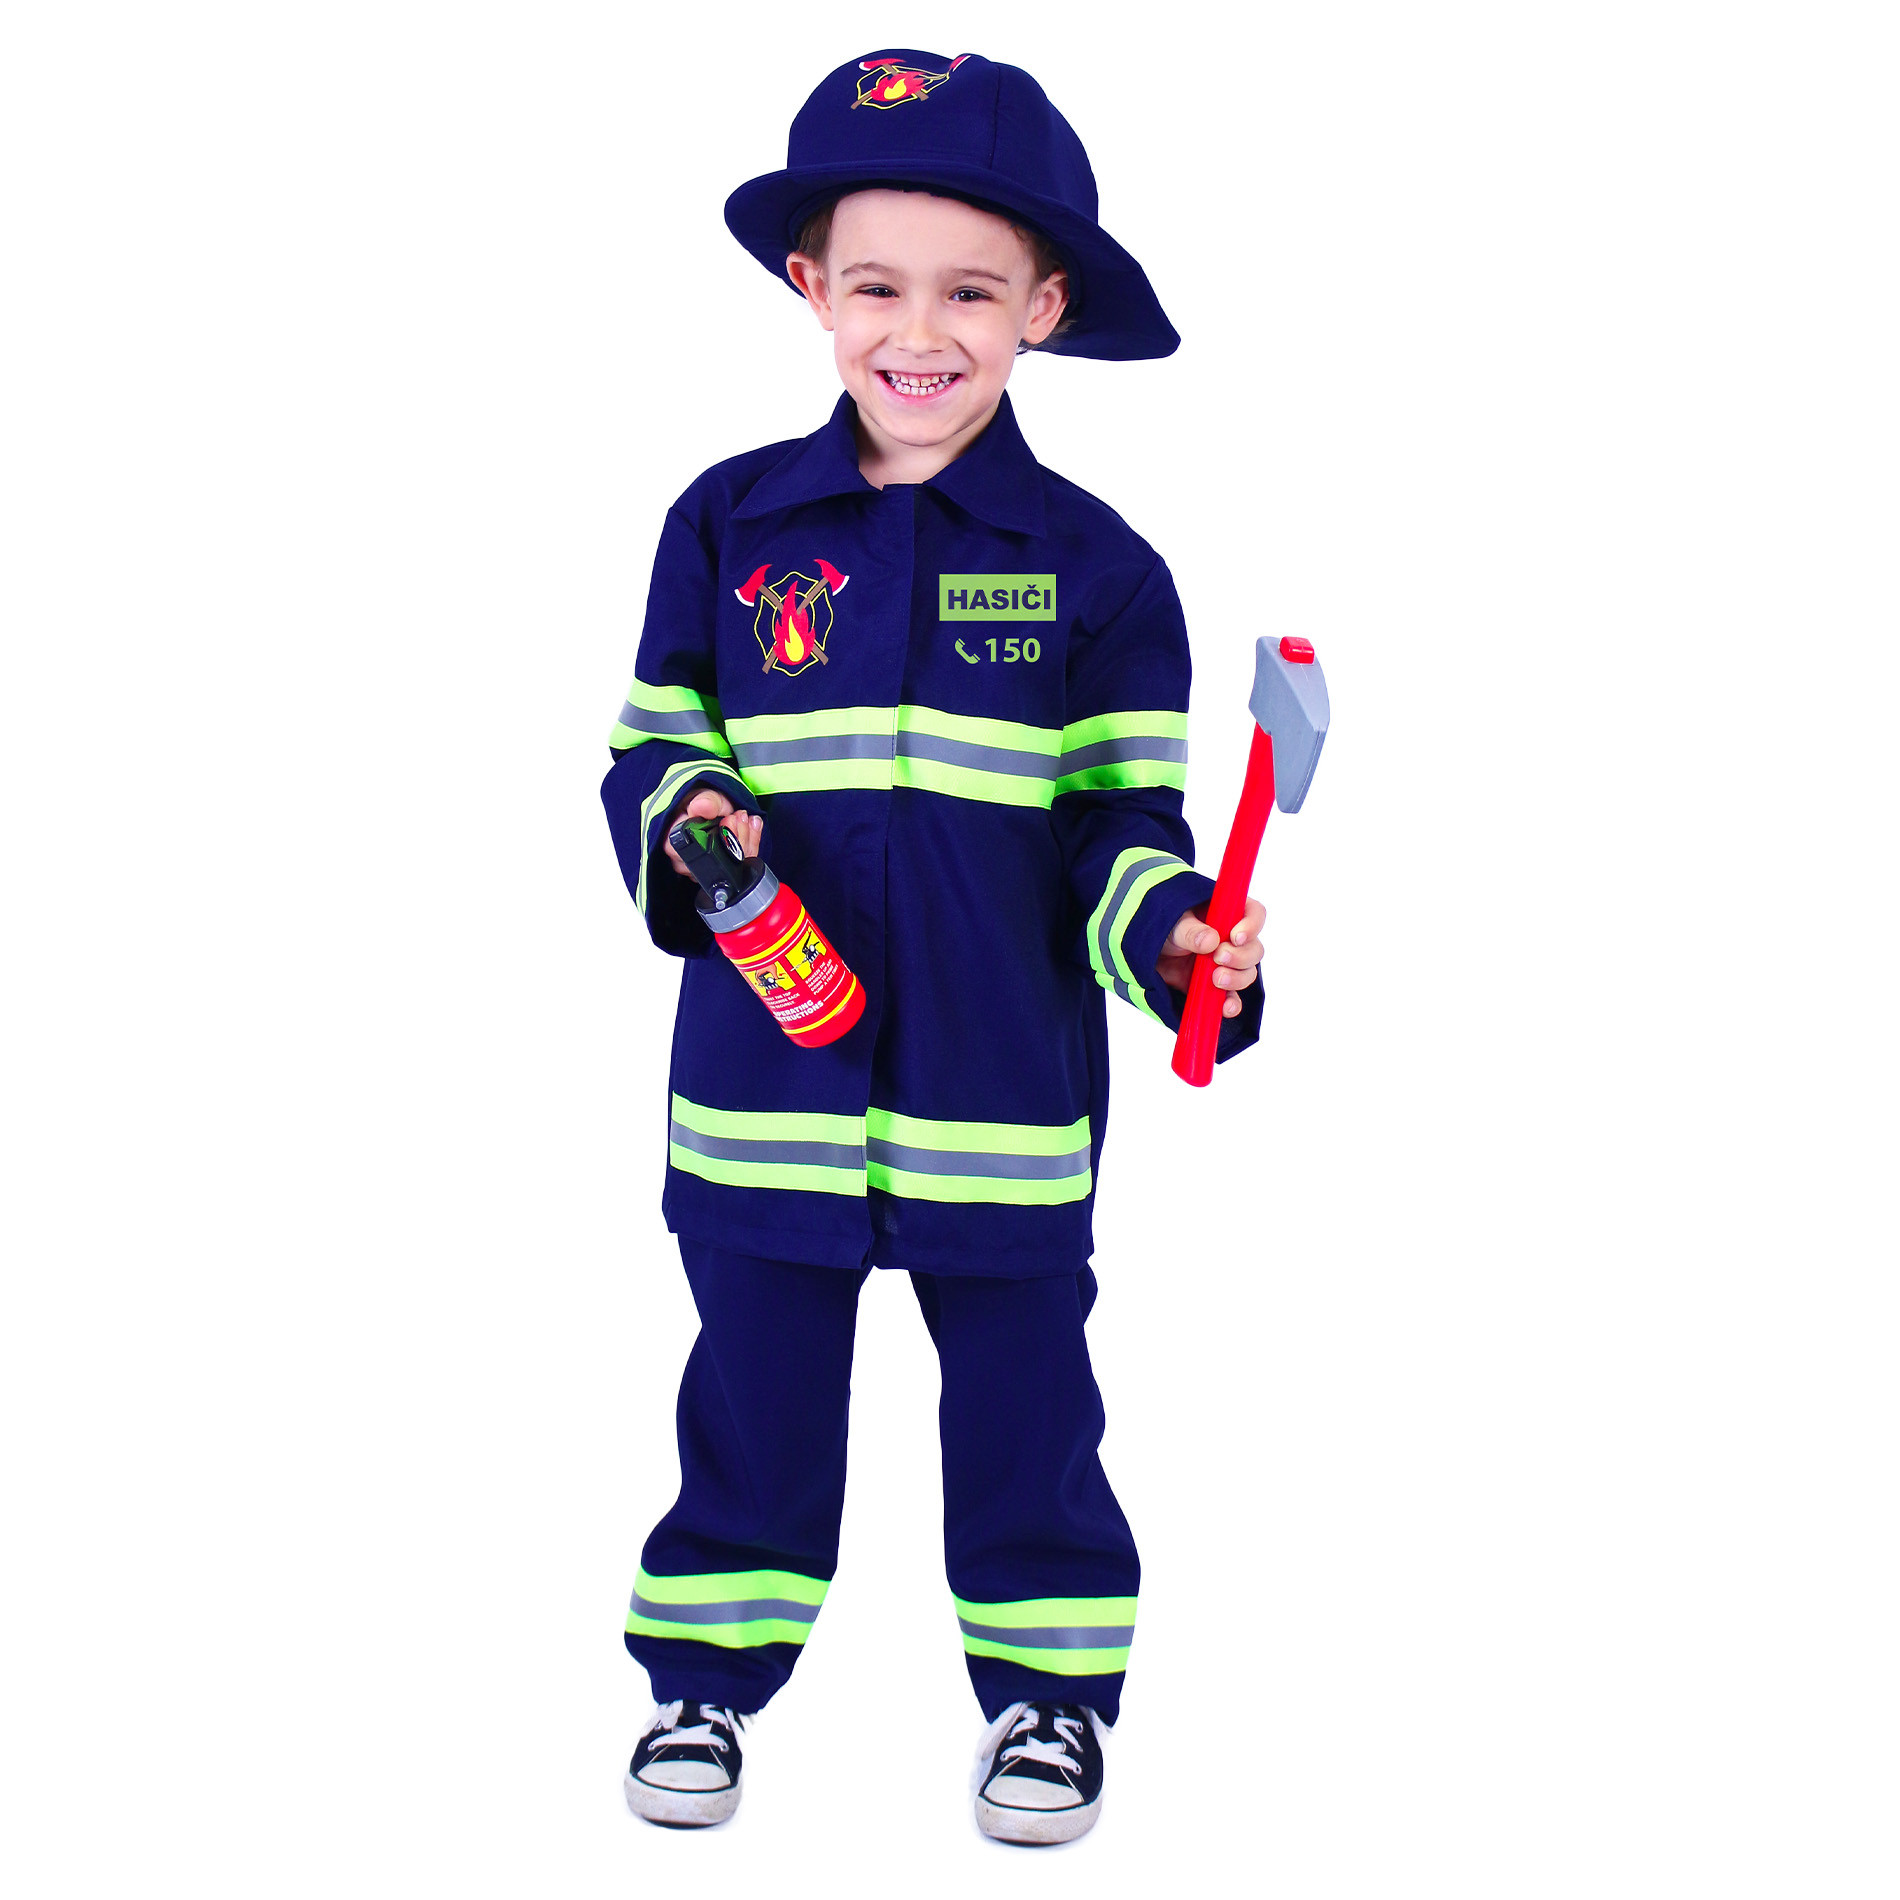 Children costume - fireman (M)